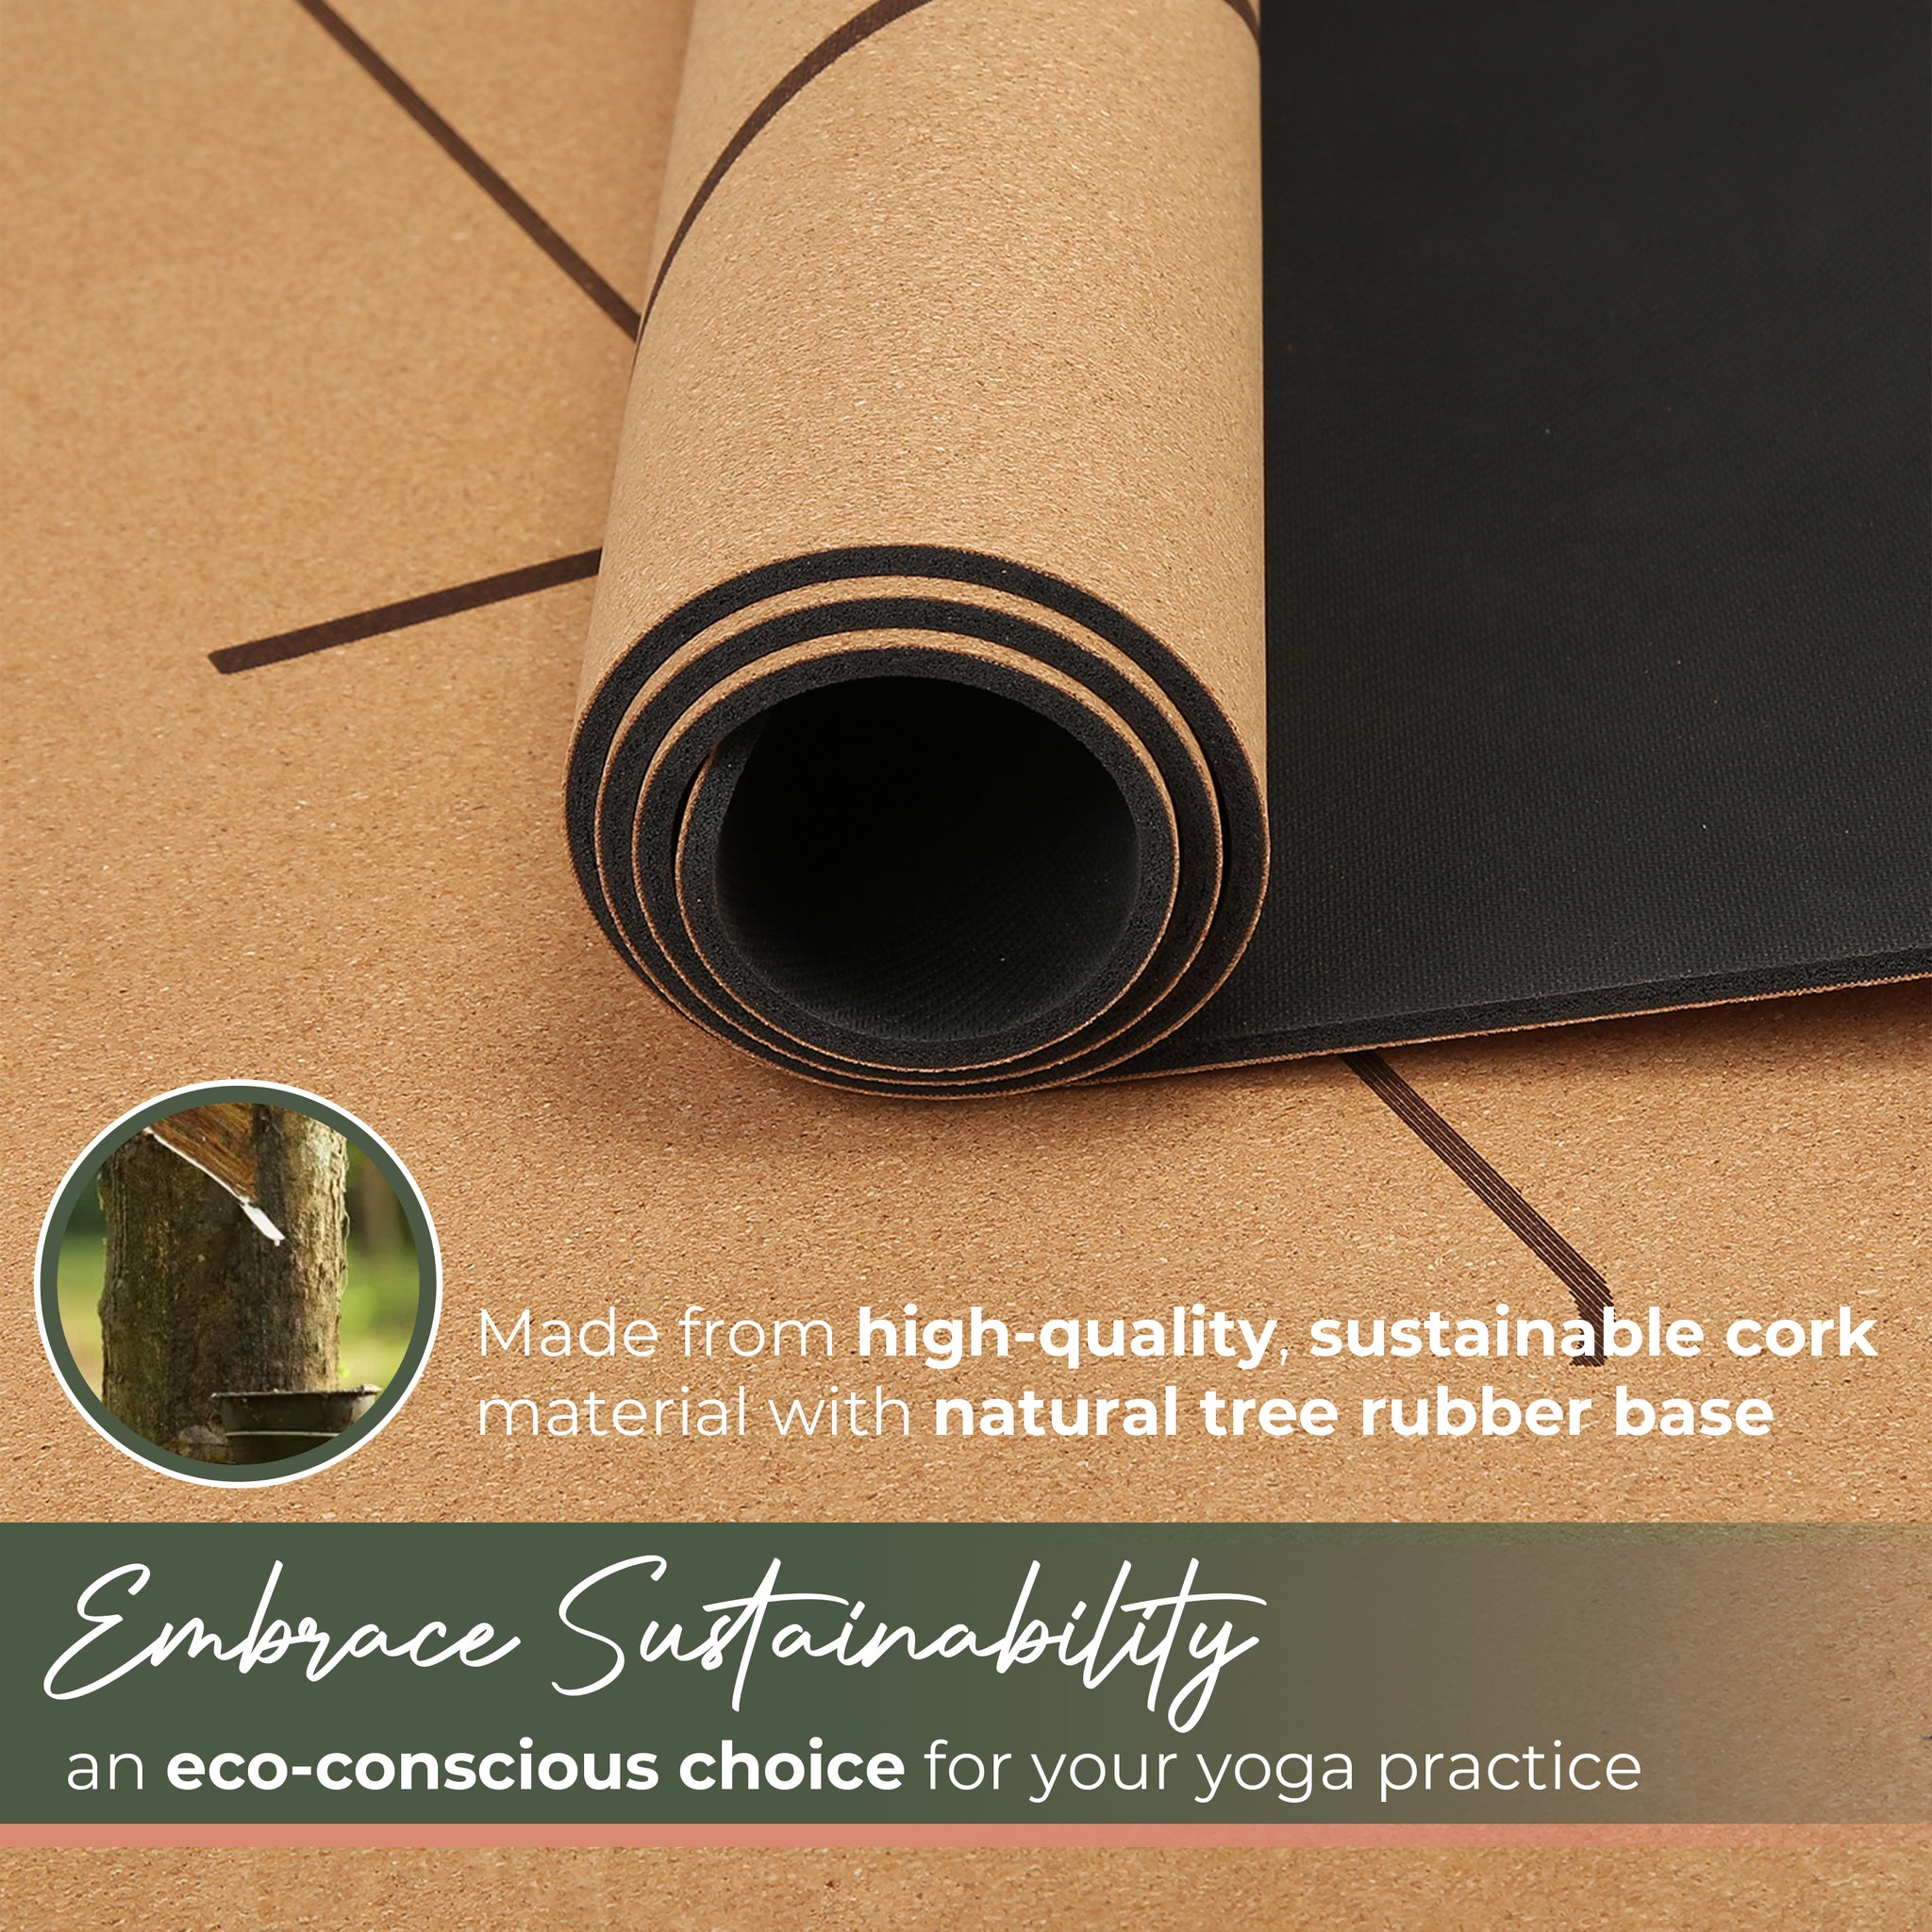 The Most Portable Eco-Friendly Cork Yoga Mat - Nomad Yoga Mat